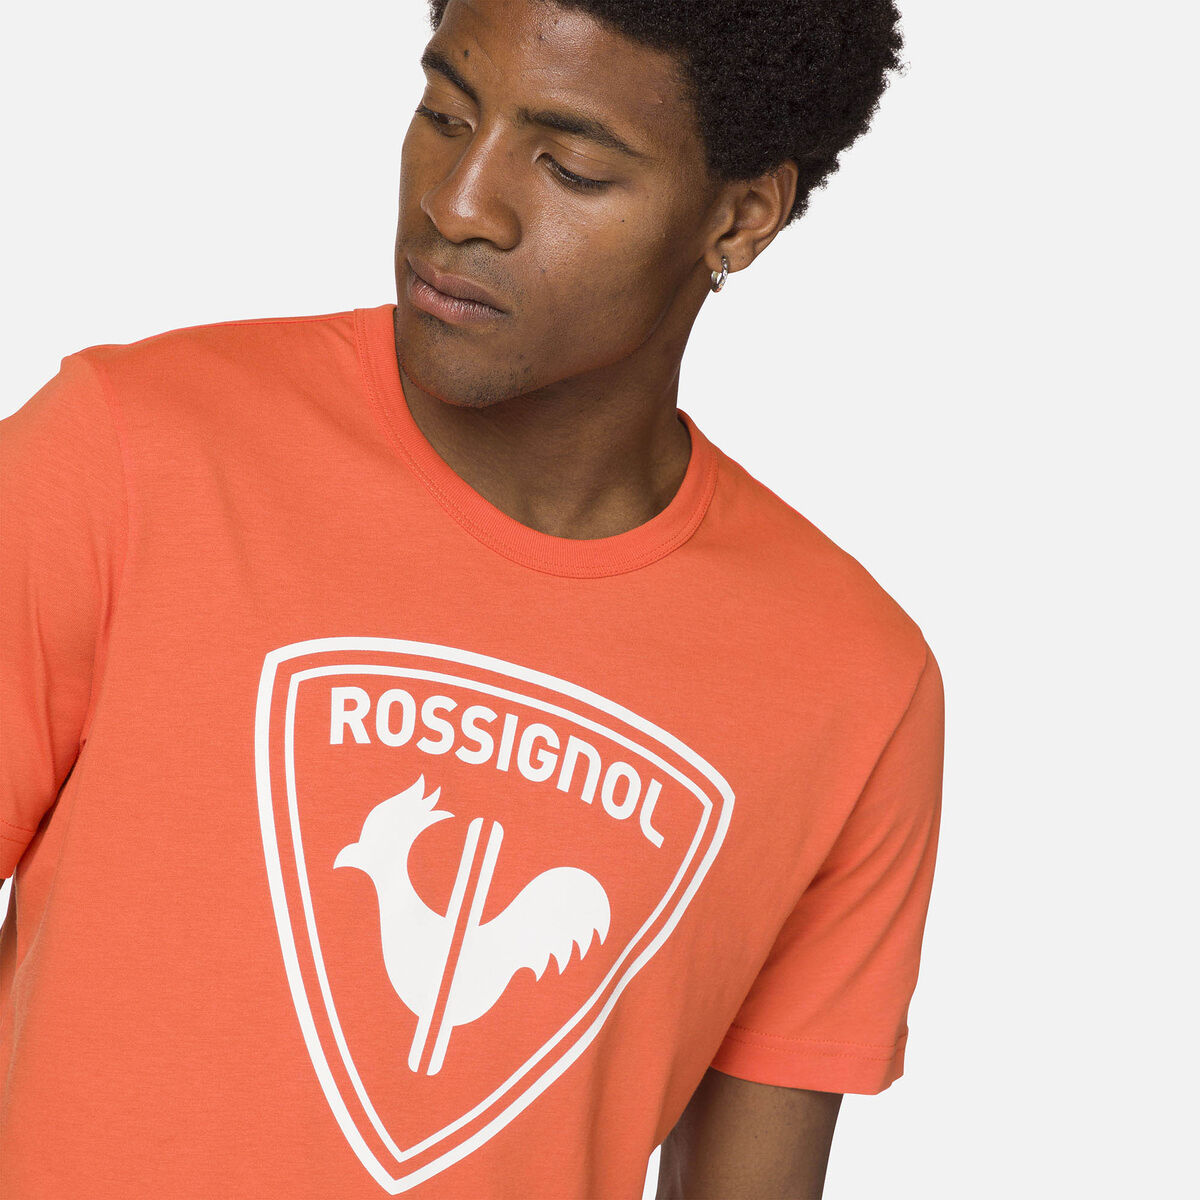 Rossignol Men's logo tee orange